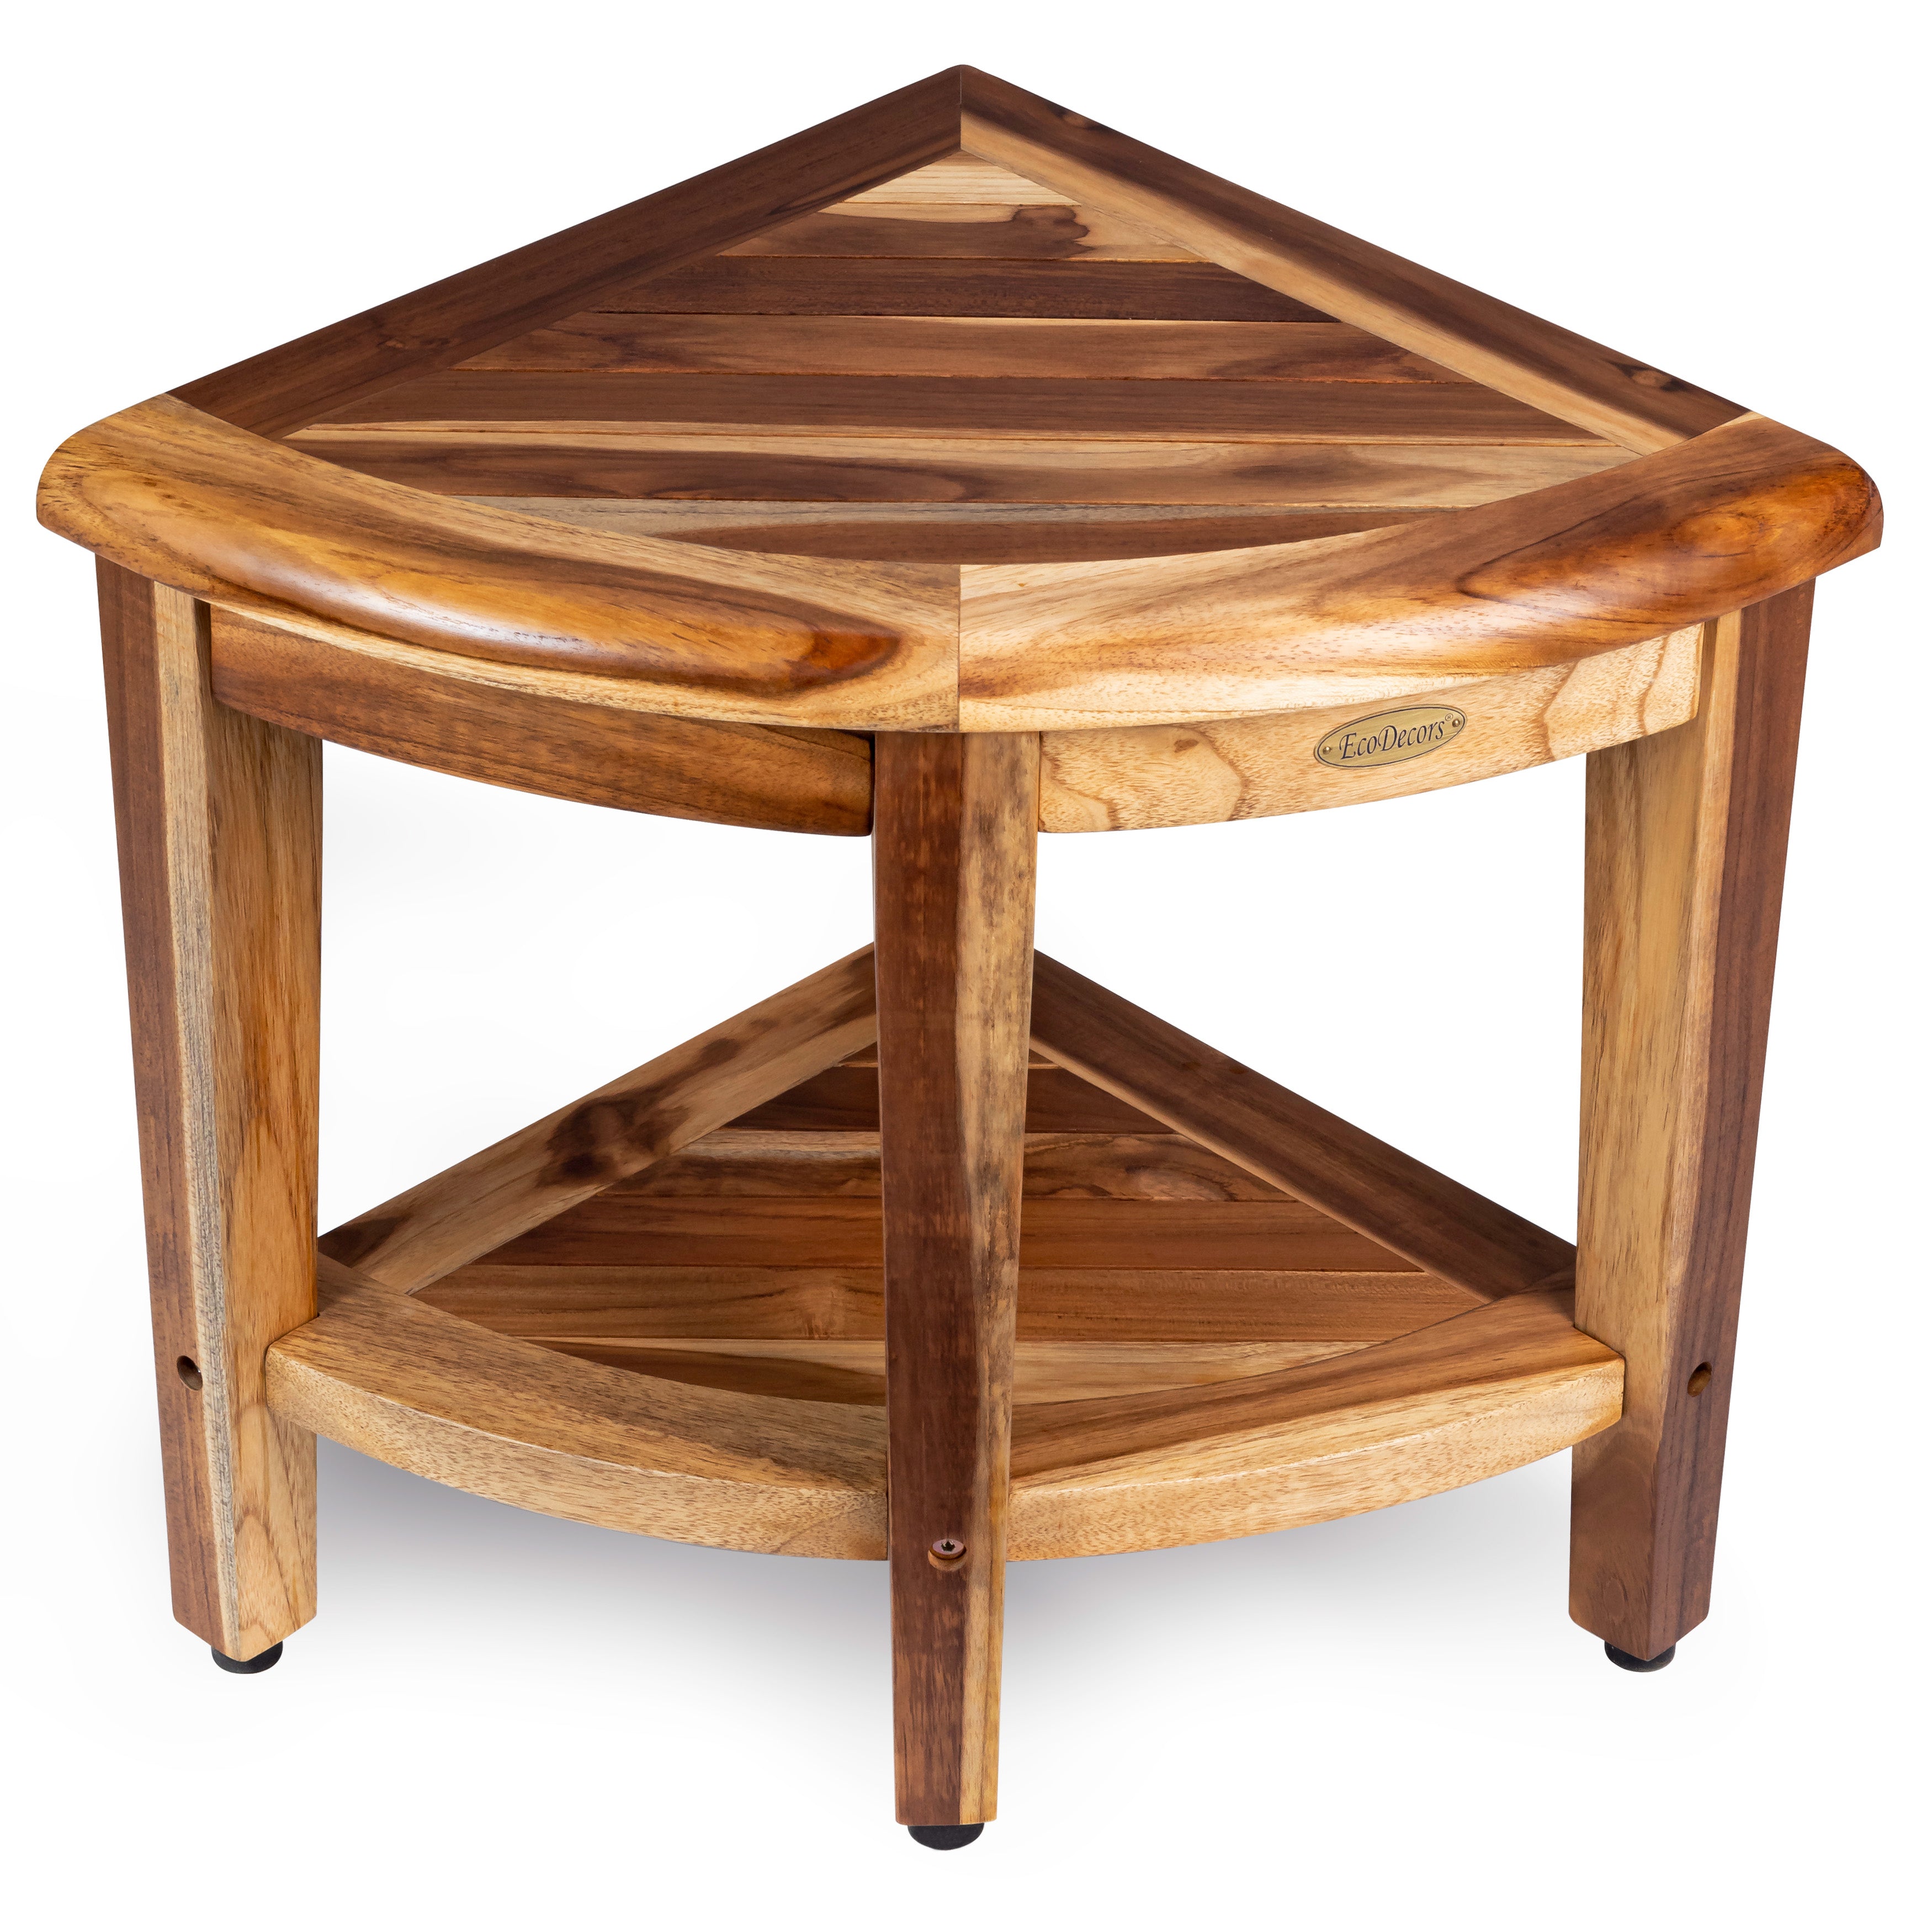 EcoDecors® SnazzyCorner® 18"H Teak Wood Corner Shower Bench with Shelf in EarthyTeak Finish